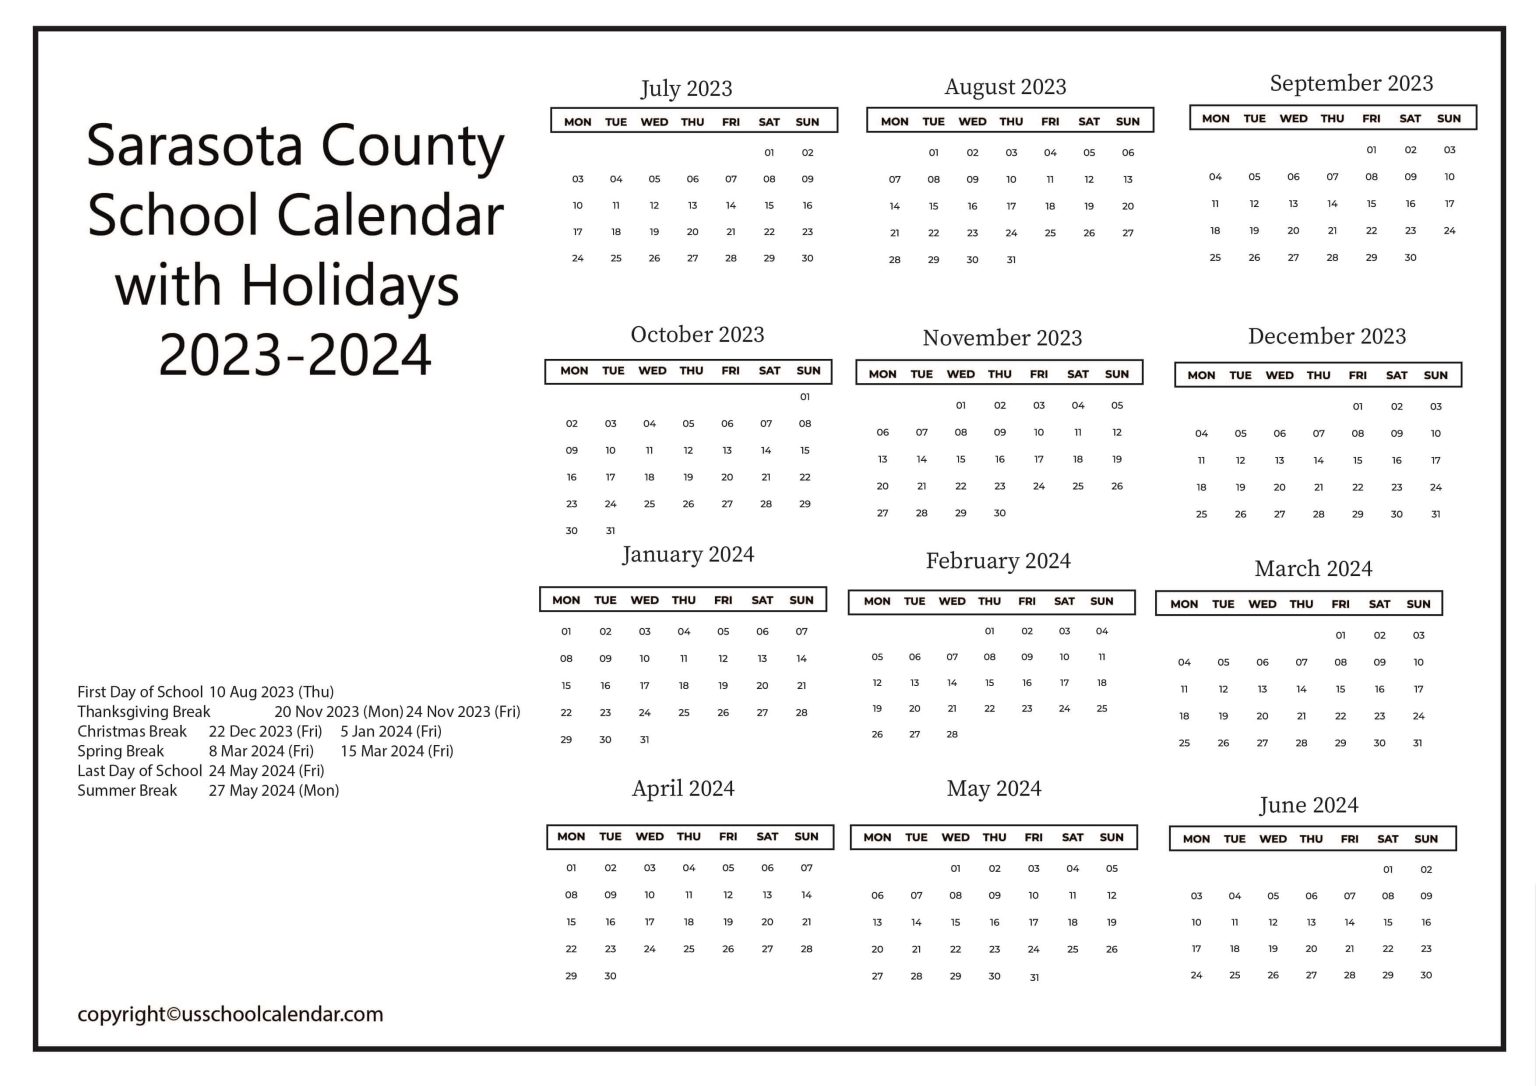 sarasota-county-school-calendar-with-holidays-2023-2024